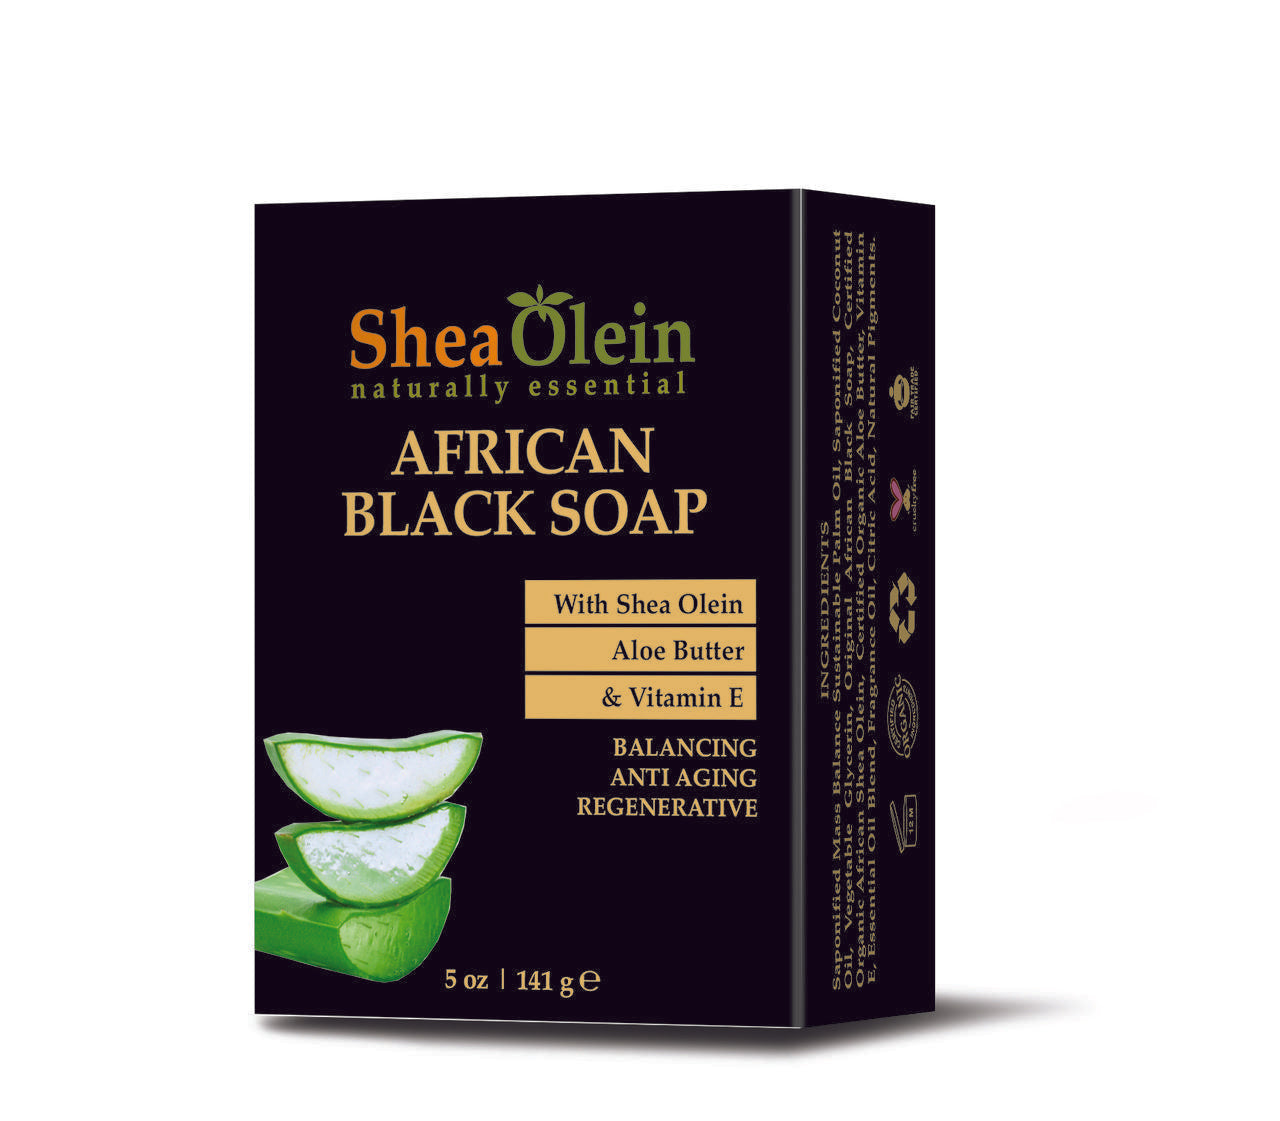 African Black Soap with Shea Olein, Aloe Butter & Vitamin E 5oz